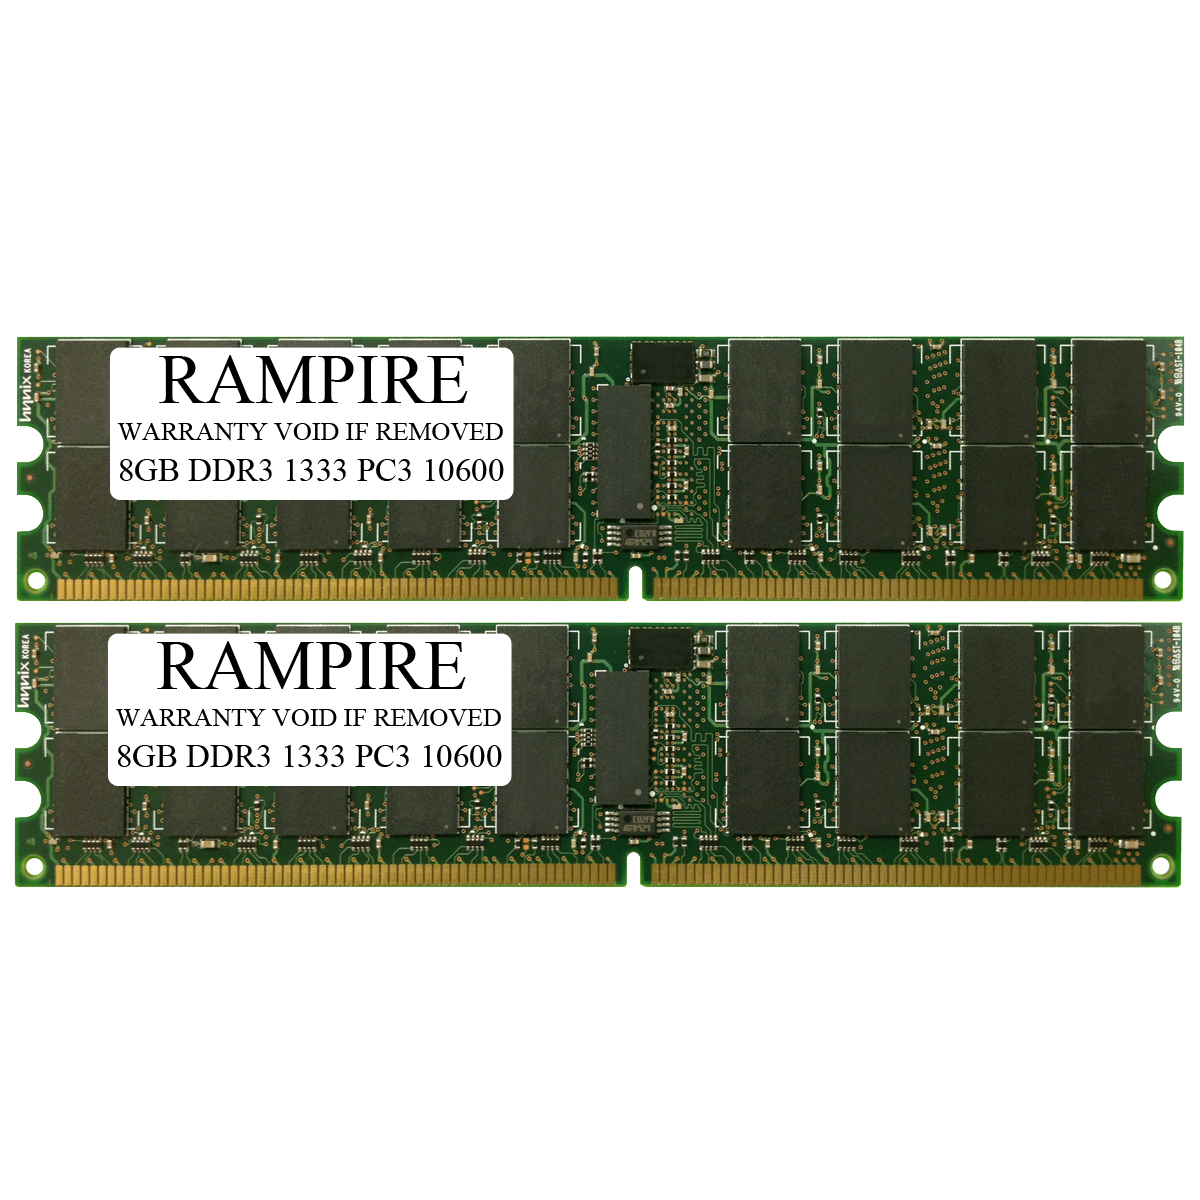 RAMPIRE 16GB (2 x 8GB) DDR3 1333 (PC3 10600) 240-Pin SDRAM 2Rx4 Standard Profile 1.5V ECC Registered Server Memory